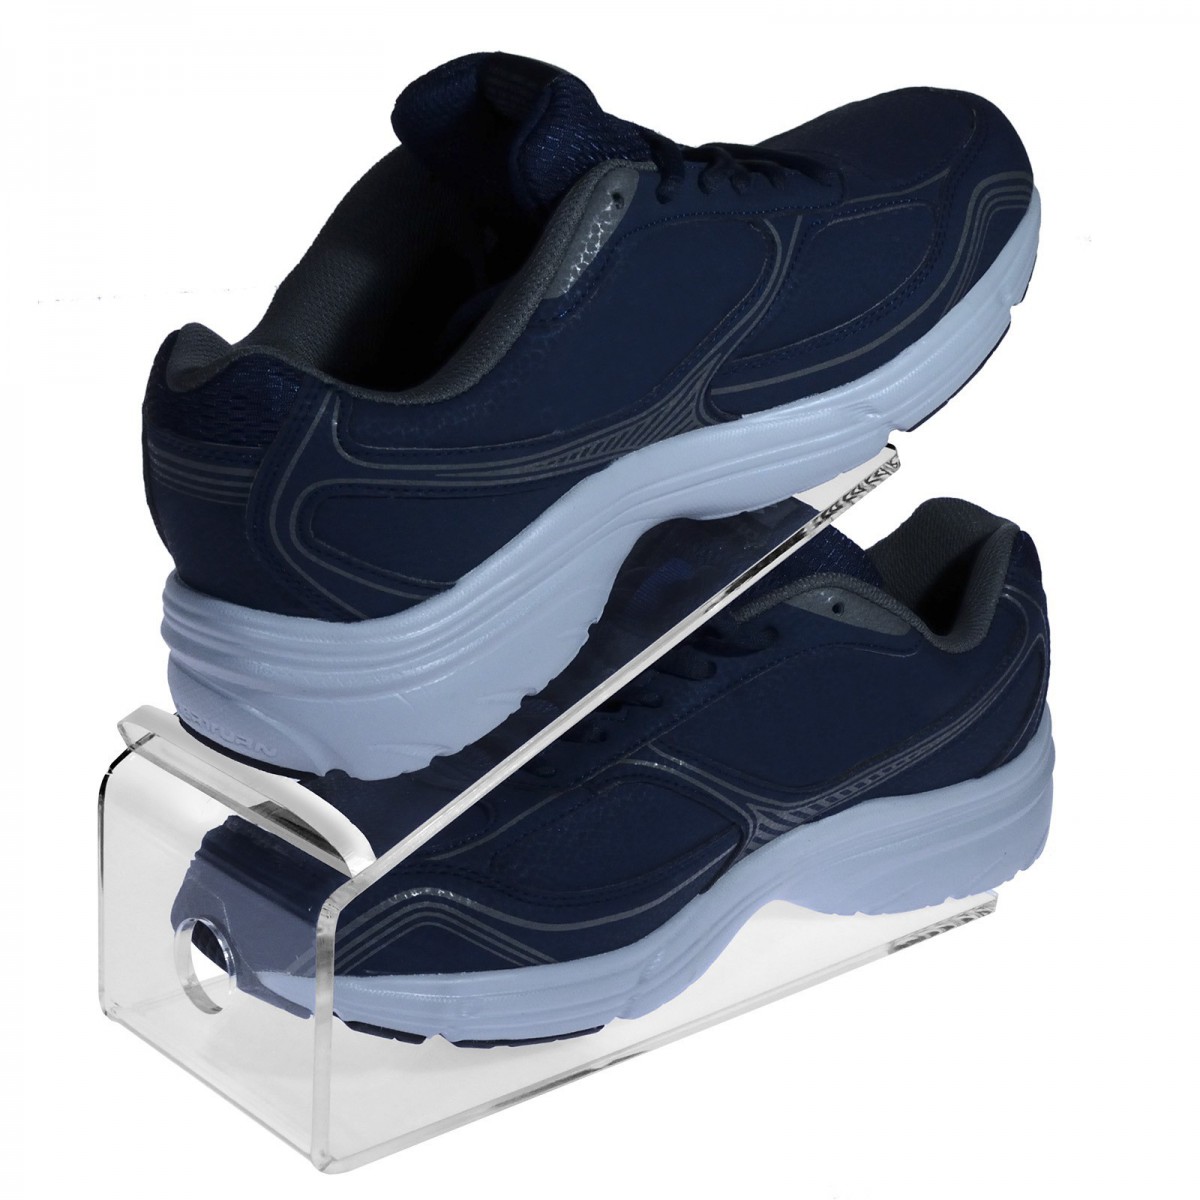 Espositore porta scarpe in plexiglass trasparente - CM(LxPxH): 26x10x16